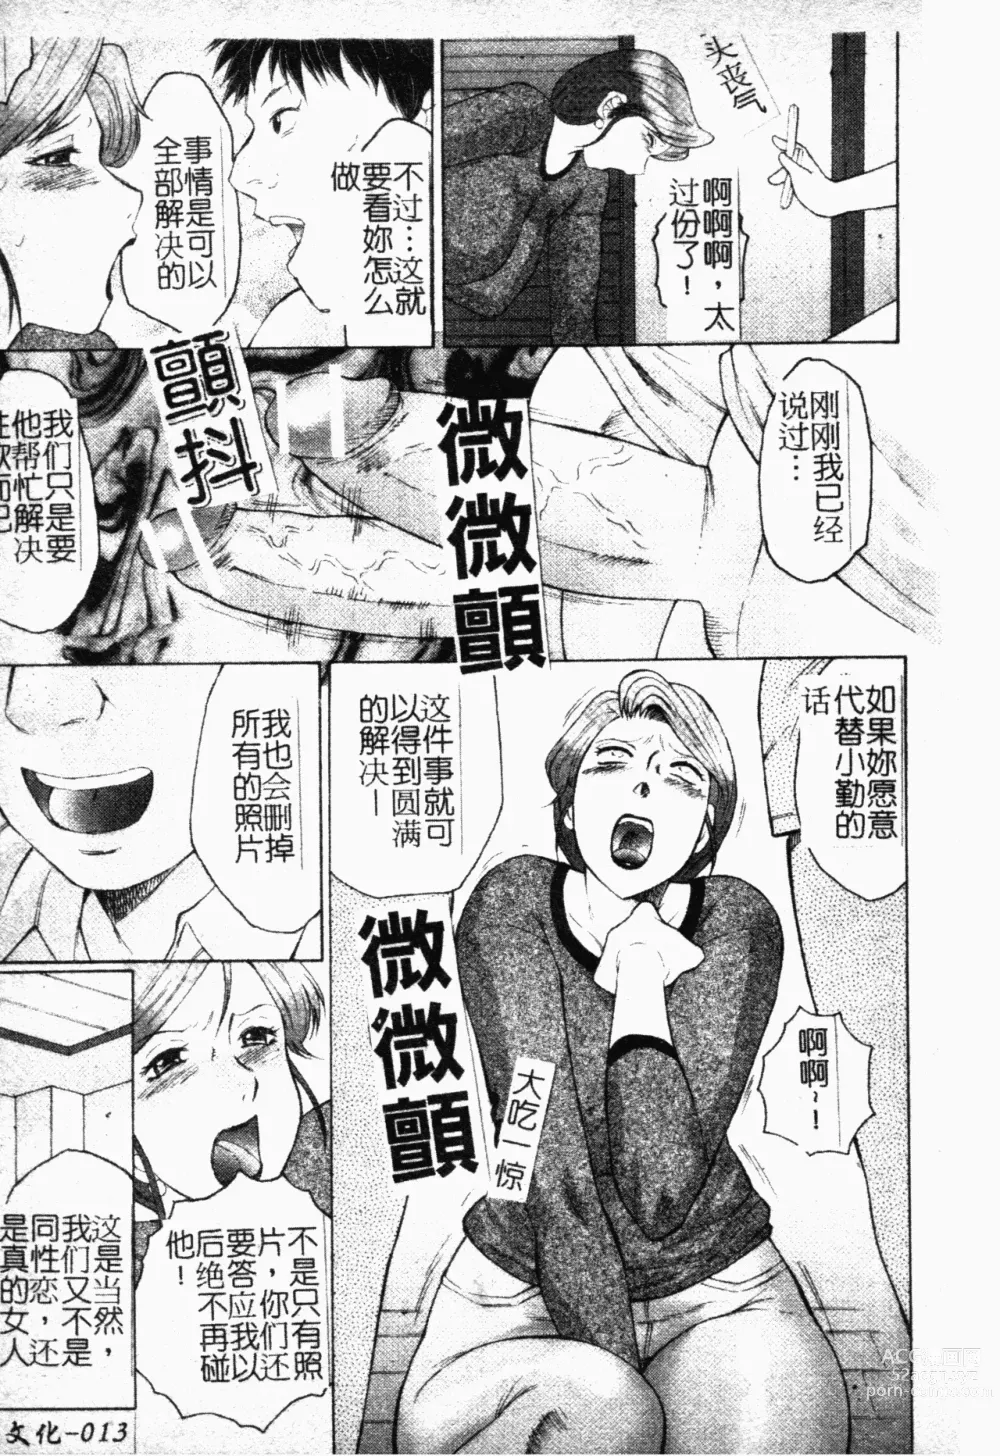 Page 13 of manga Haha Mamire